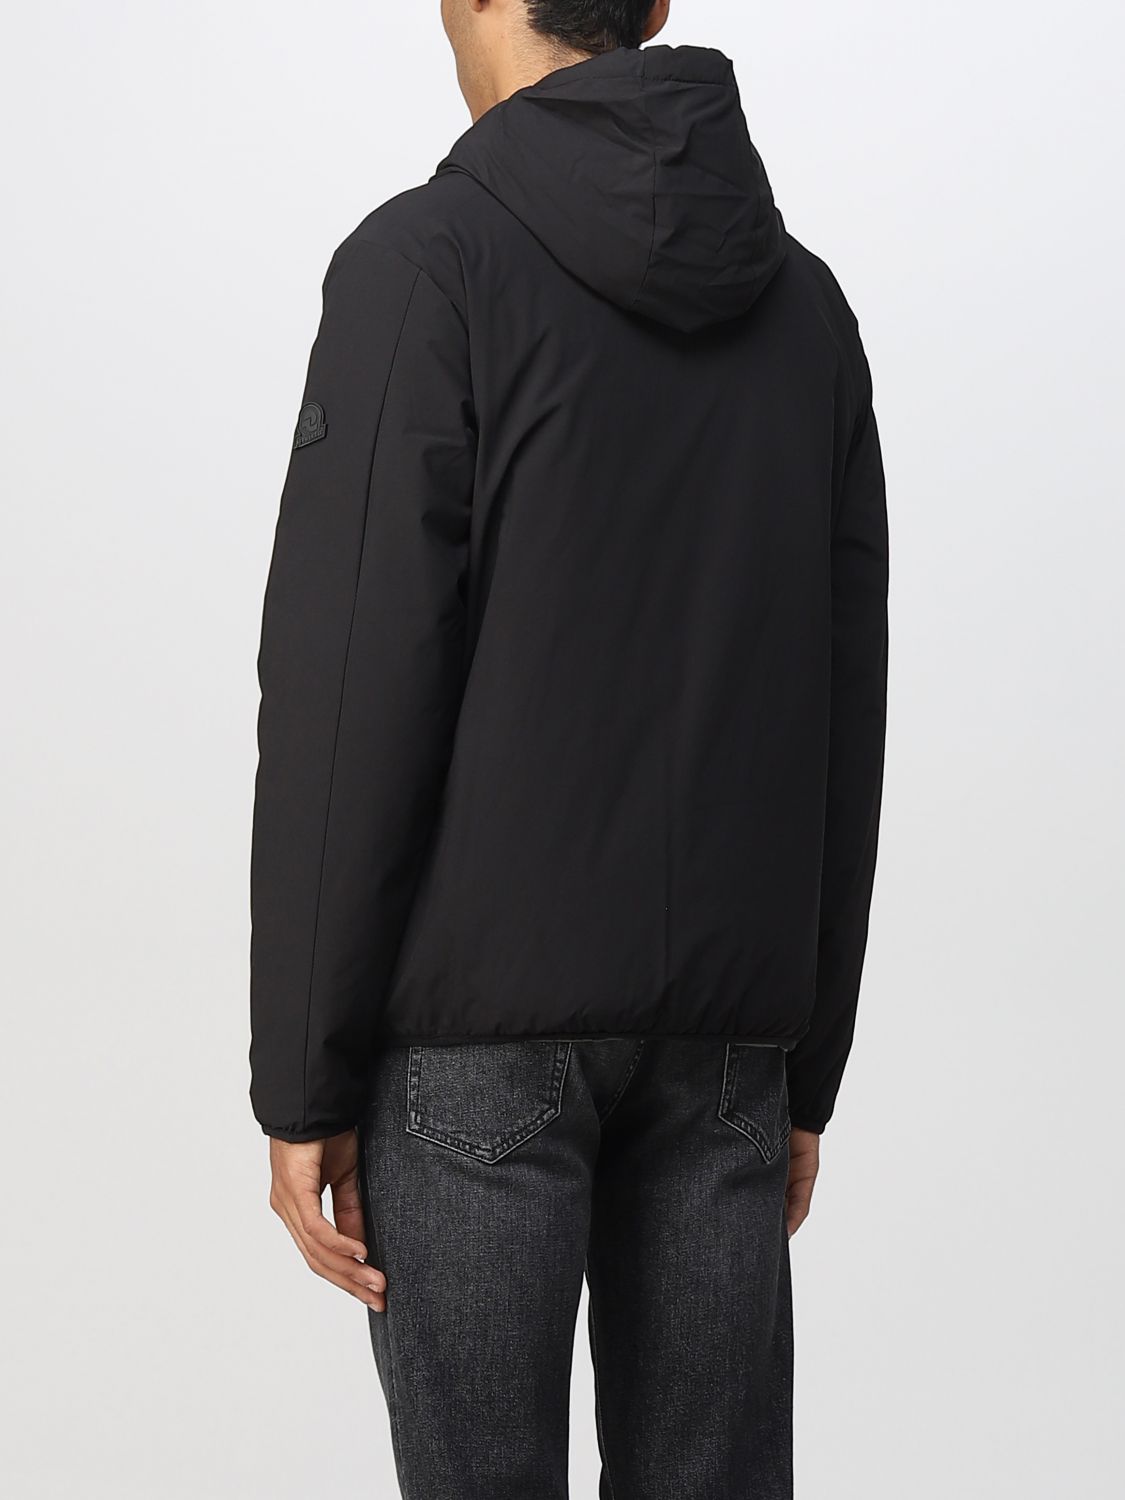 Jacket Invicta: Invicta jacket for men black 2